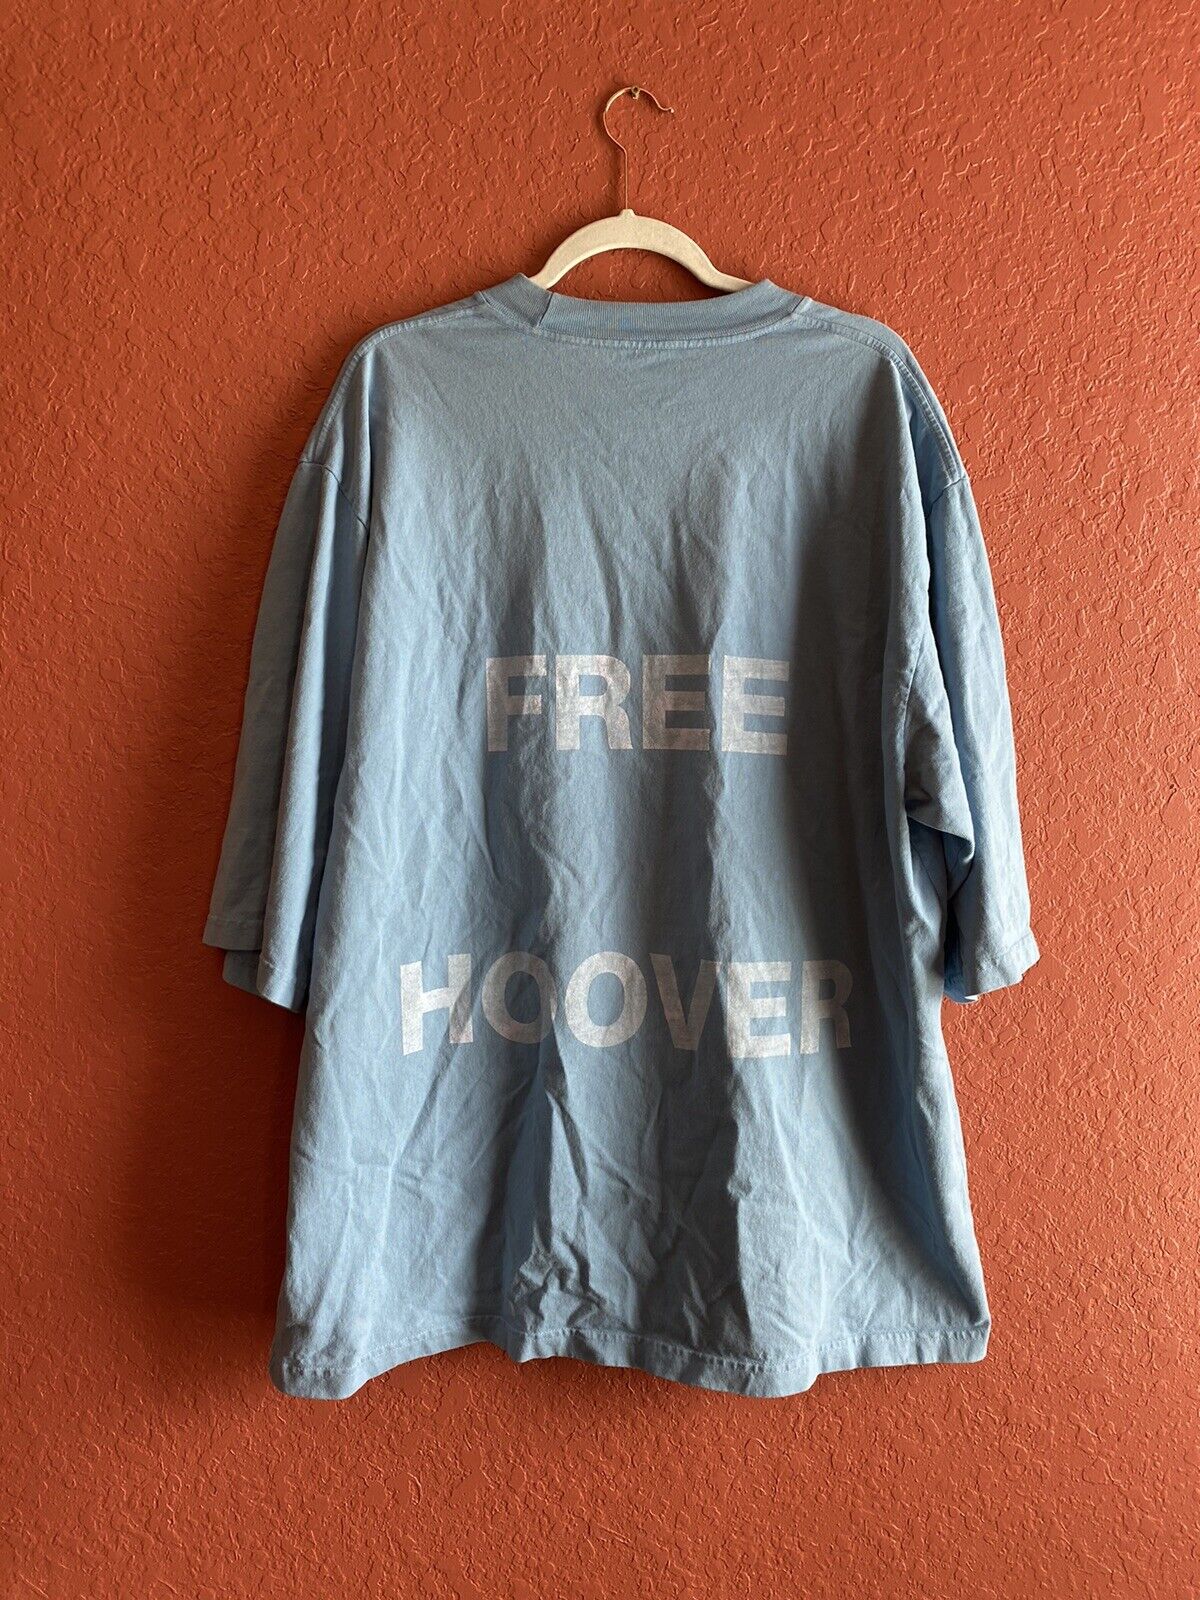 Kanye West Drake Free Larry Hoover Balenciaga Official Concert T Shirt XL